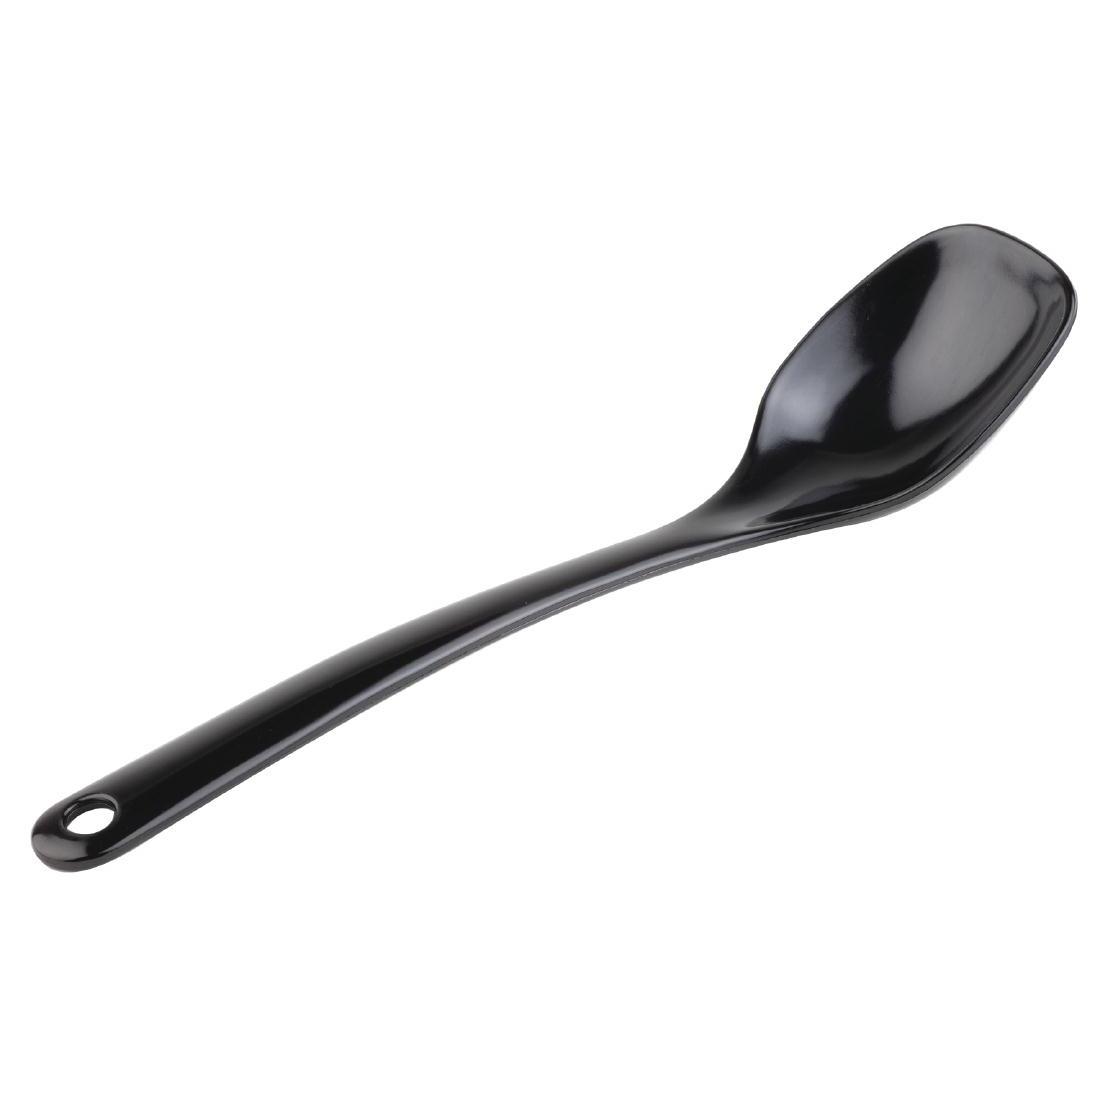 APS Spoon - Each - GC958 - 1